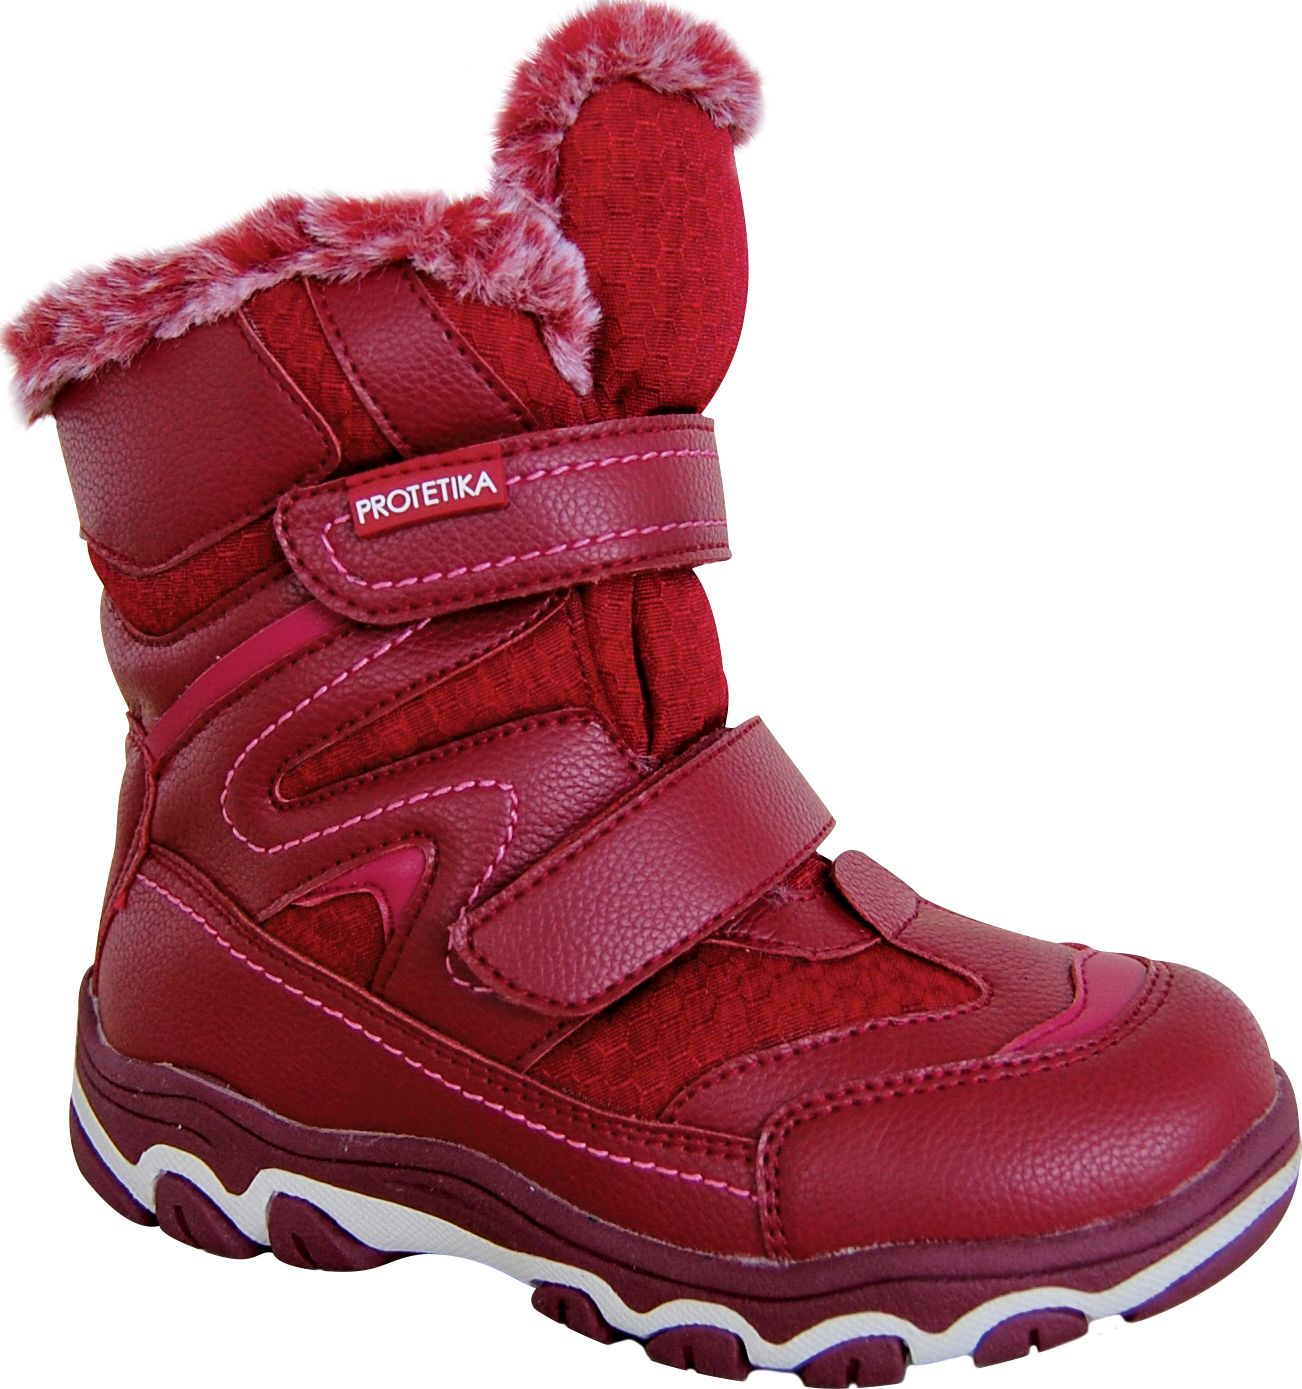 Protetika - zimné topánky s membránou PRO-tex GARNET bordo - zateplené kožušinou